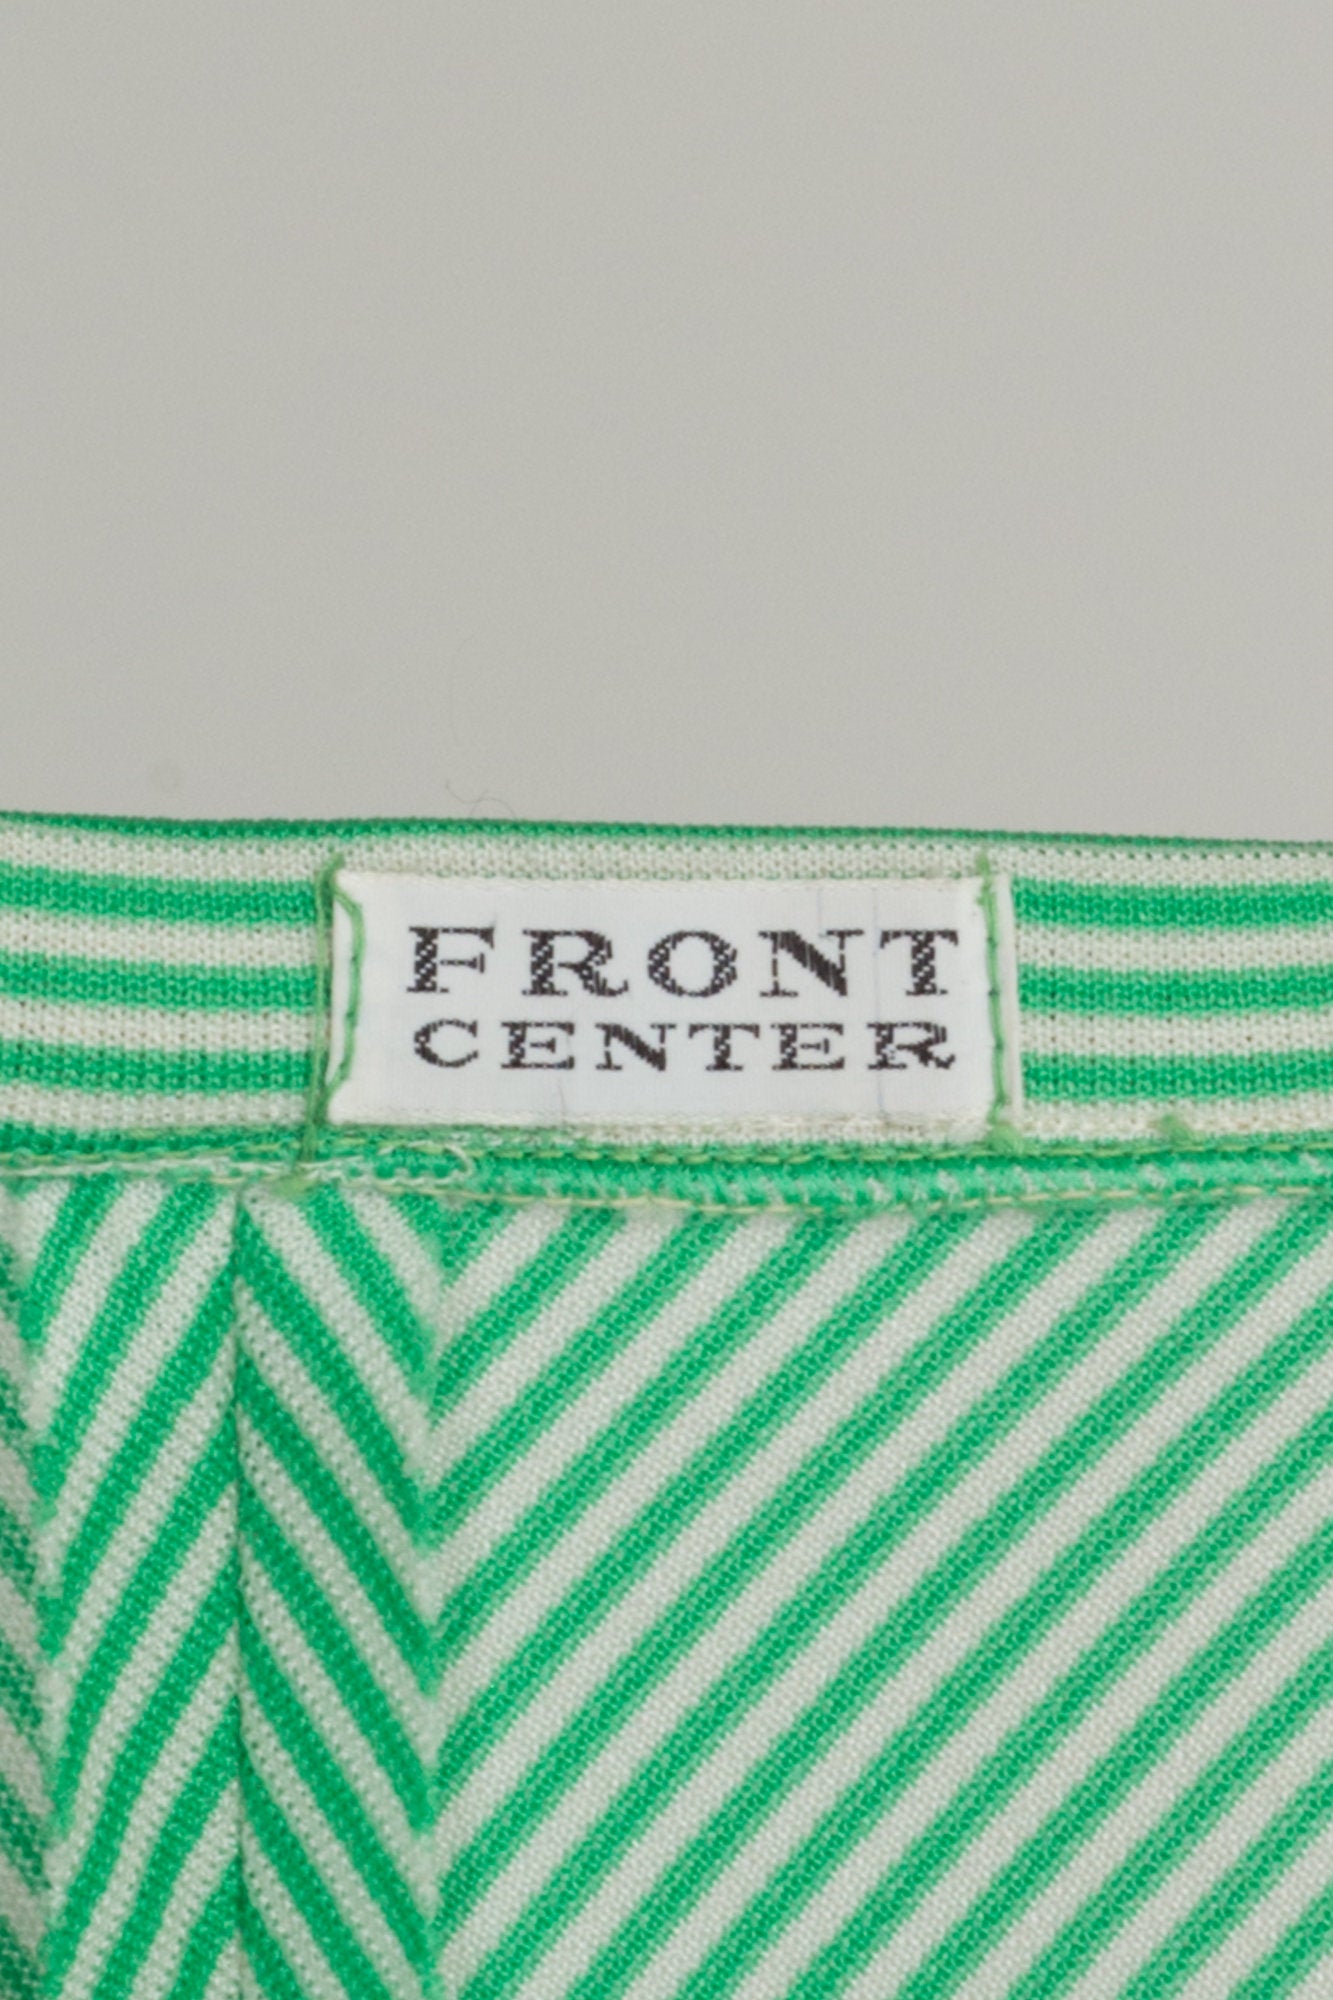 70s Green & White Striped Maxi Skirt - Medium 